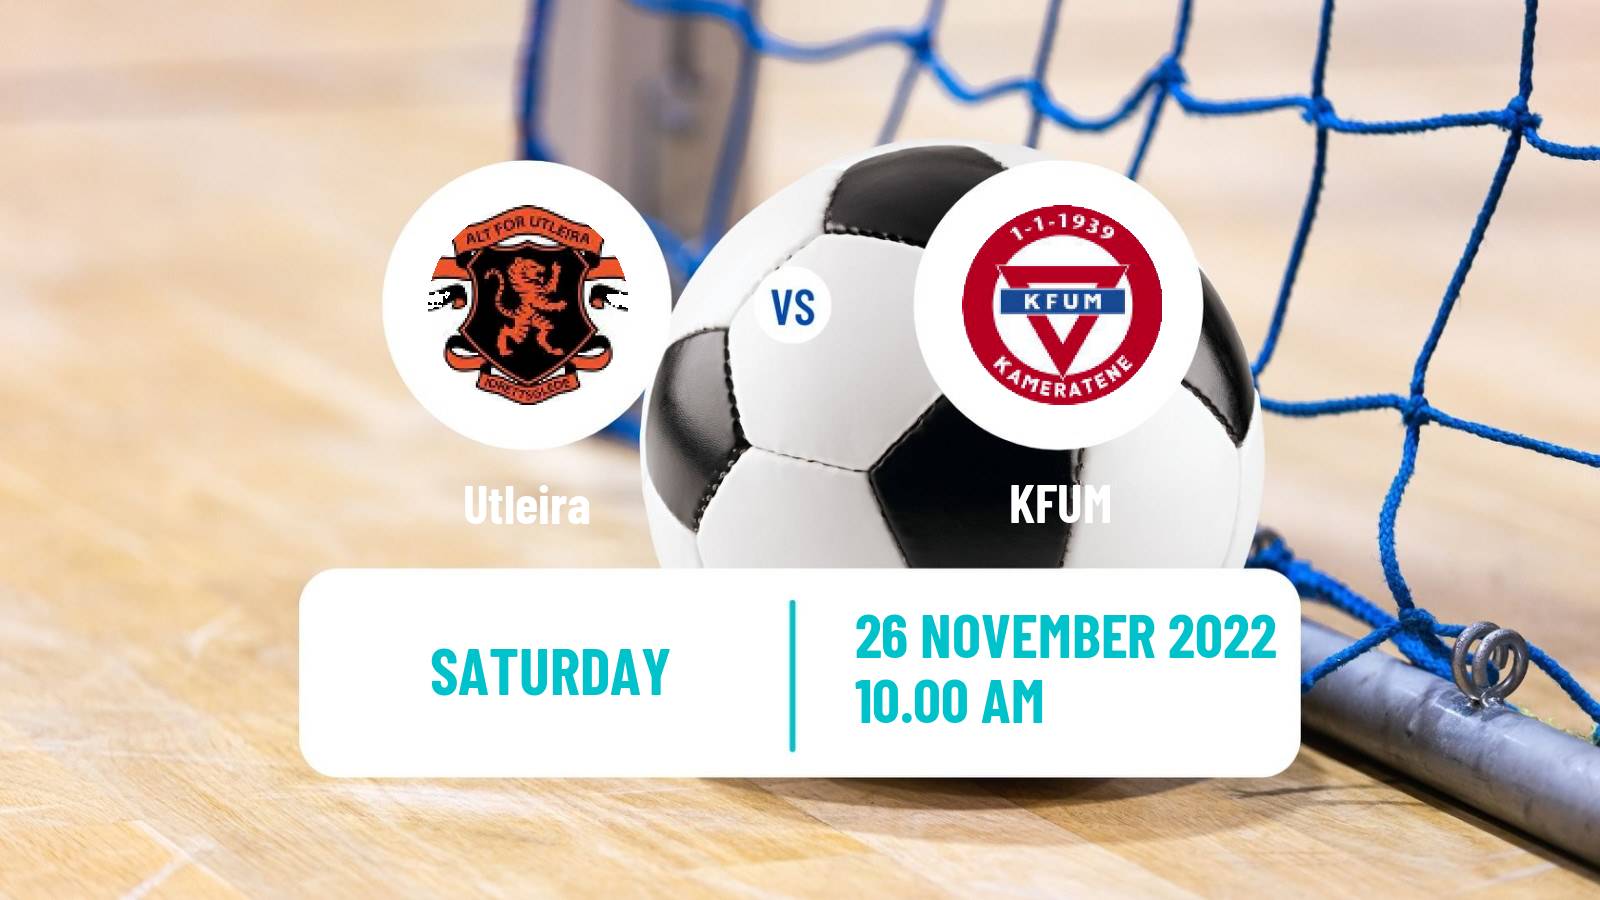 Futsal Norwegian Eliteserien Futsal Utleira - KFUM